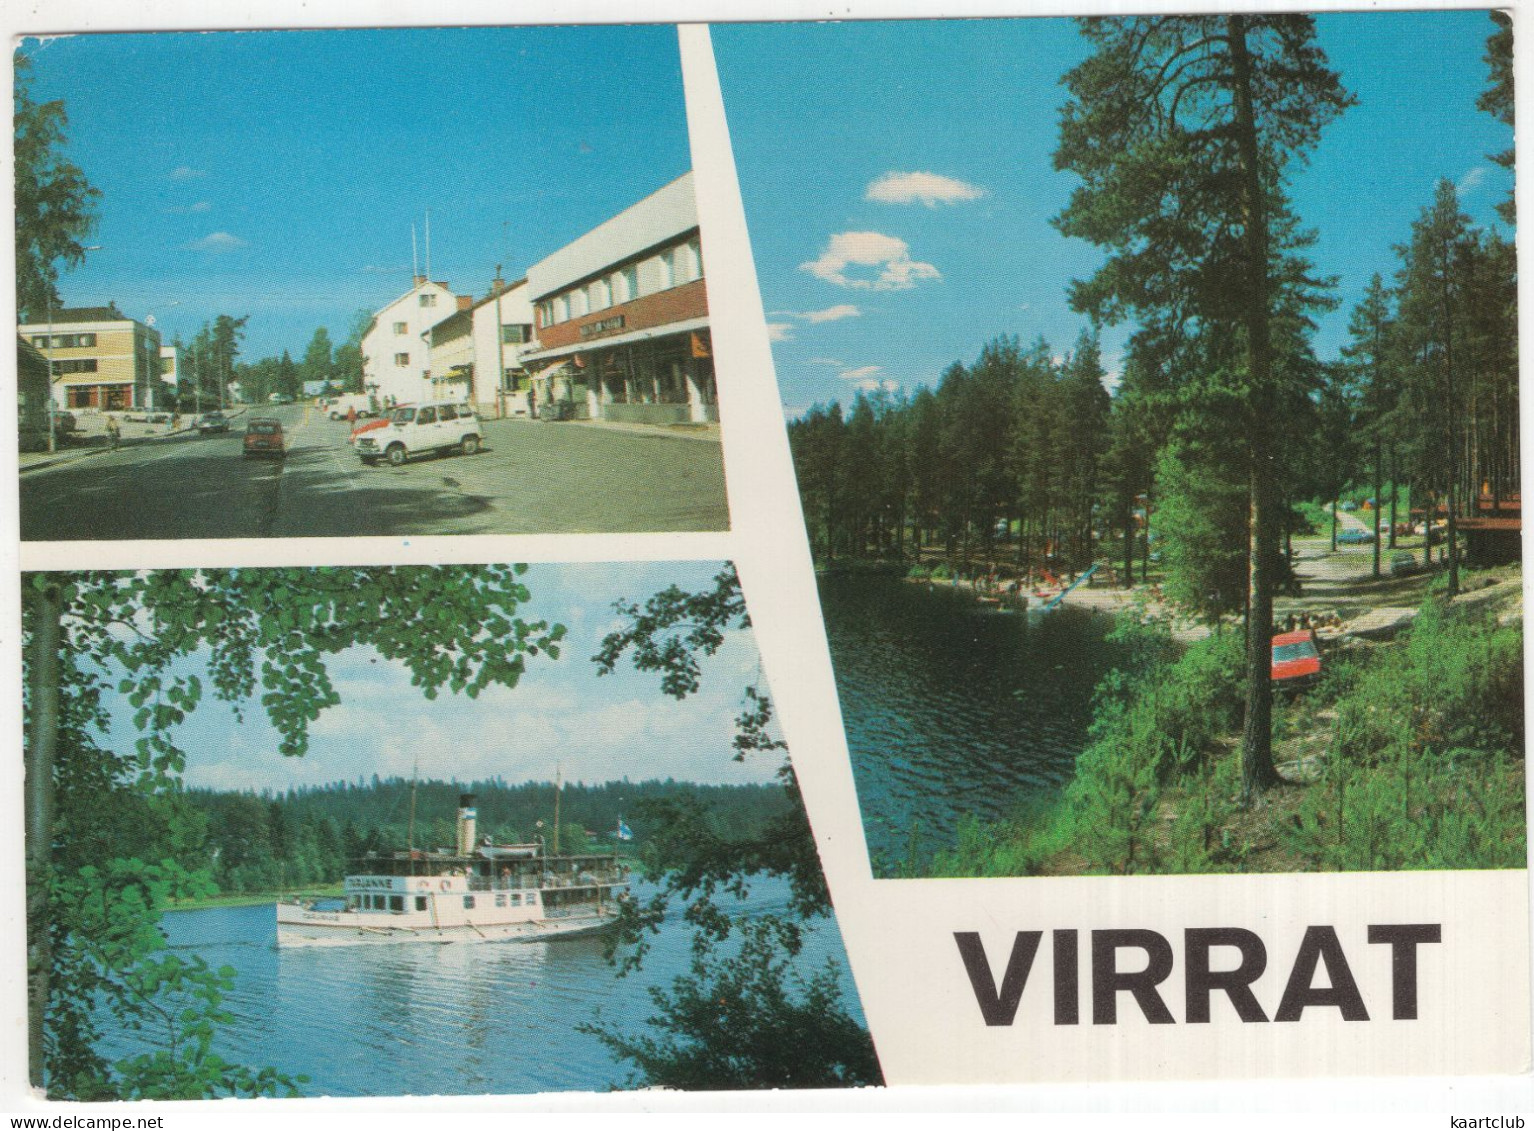 Virrat: RENAULT 4, AUSTIN MINI, STEAMER/DAMPFER - (Finland) - Voitures De Tourisme